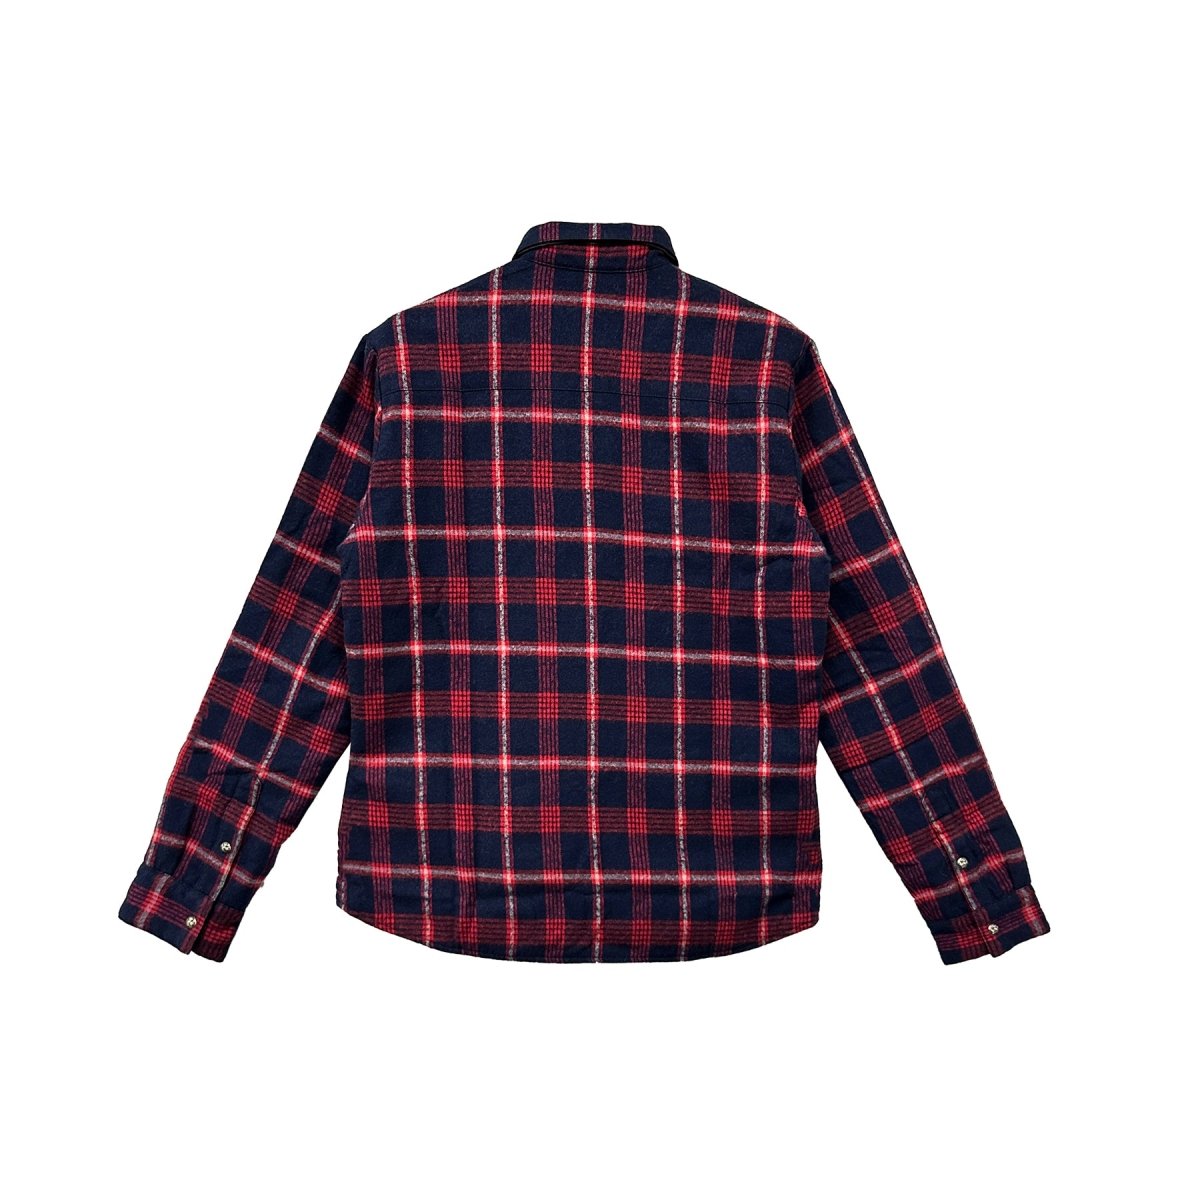 Chrome Hearts Checkered Cotton Reversible Shirt Jacket